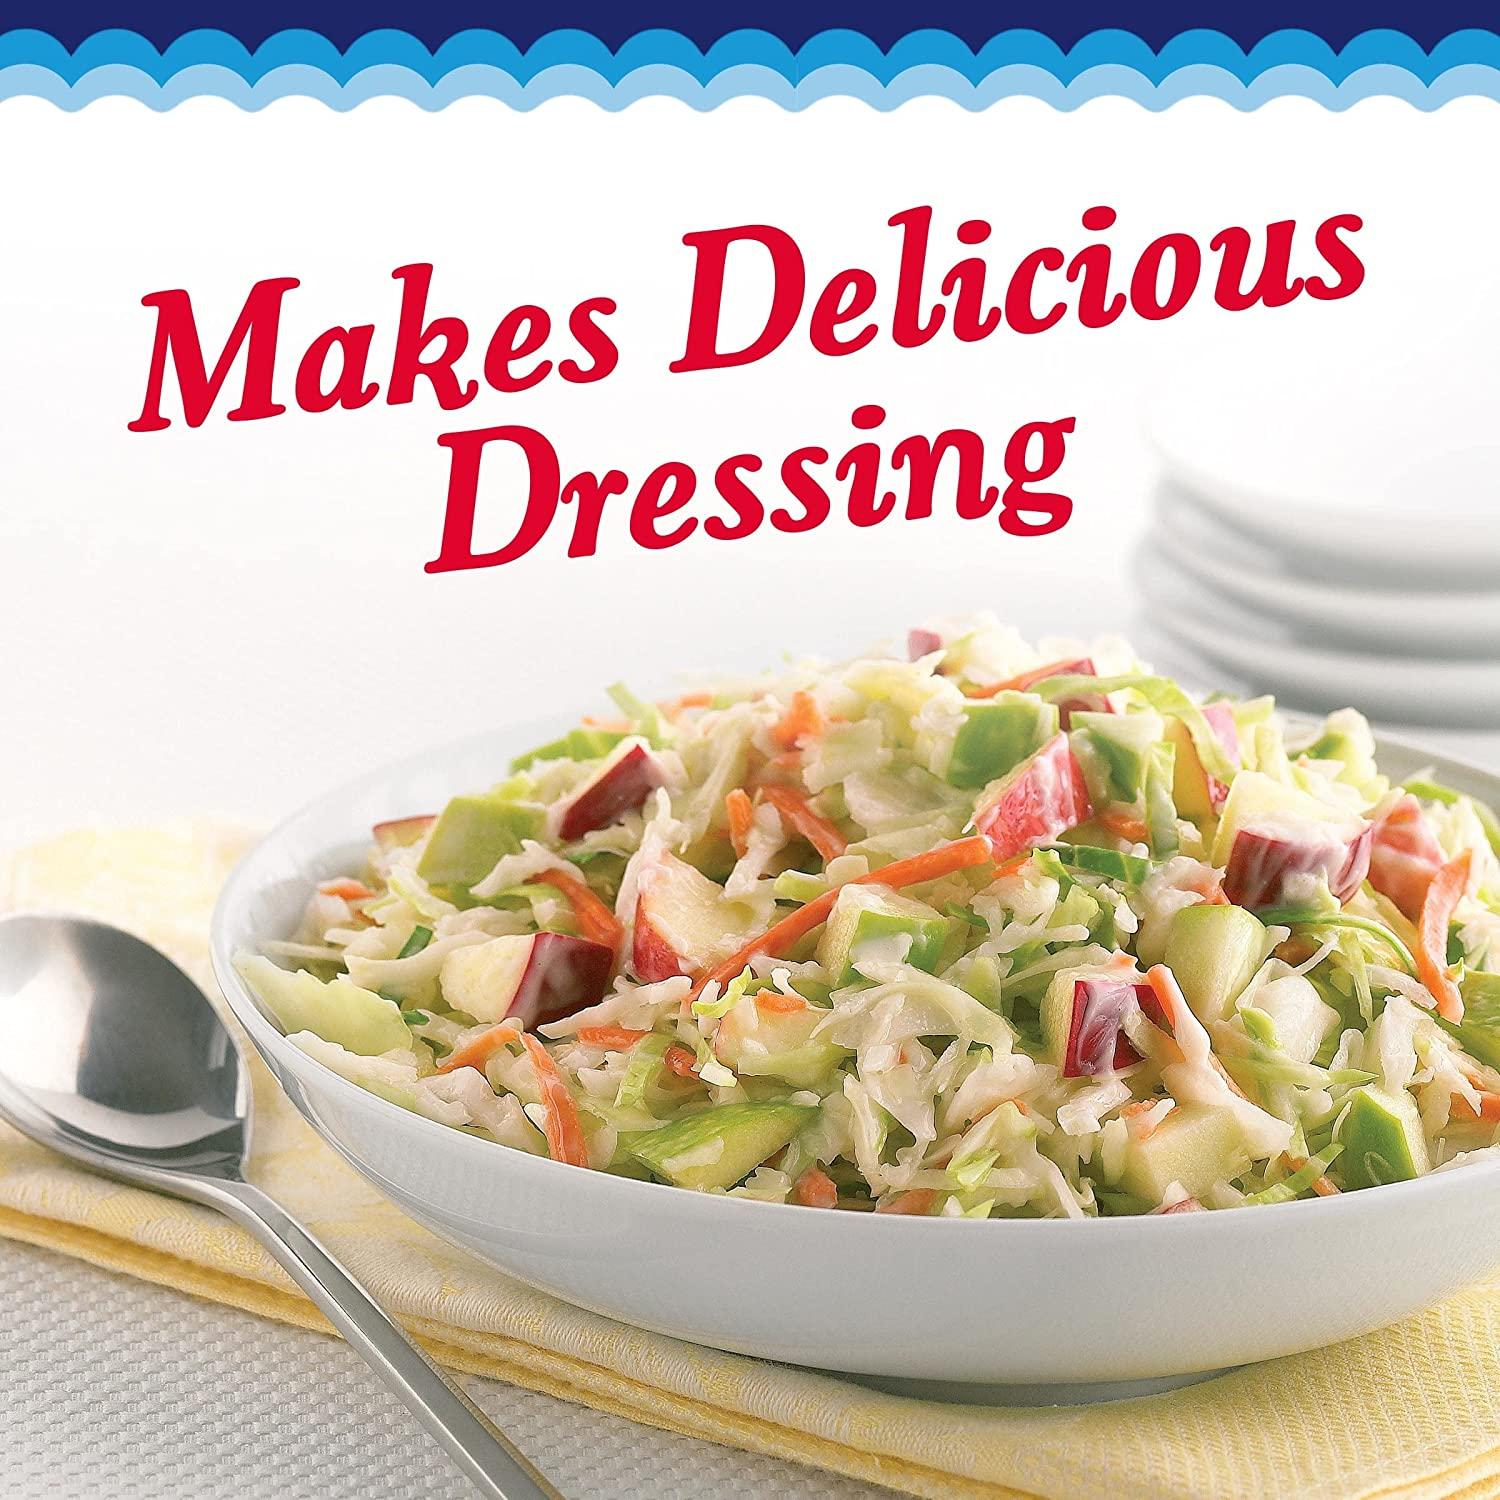  Kraft Miracle Whip Dressing Plastic Jar 30 oz : Mayonnaise :  Grocery & Gourmet Food